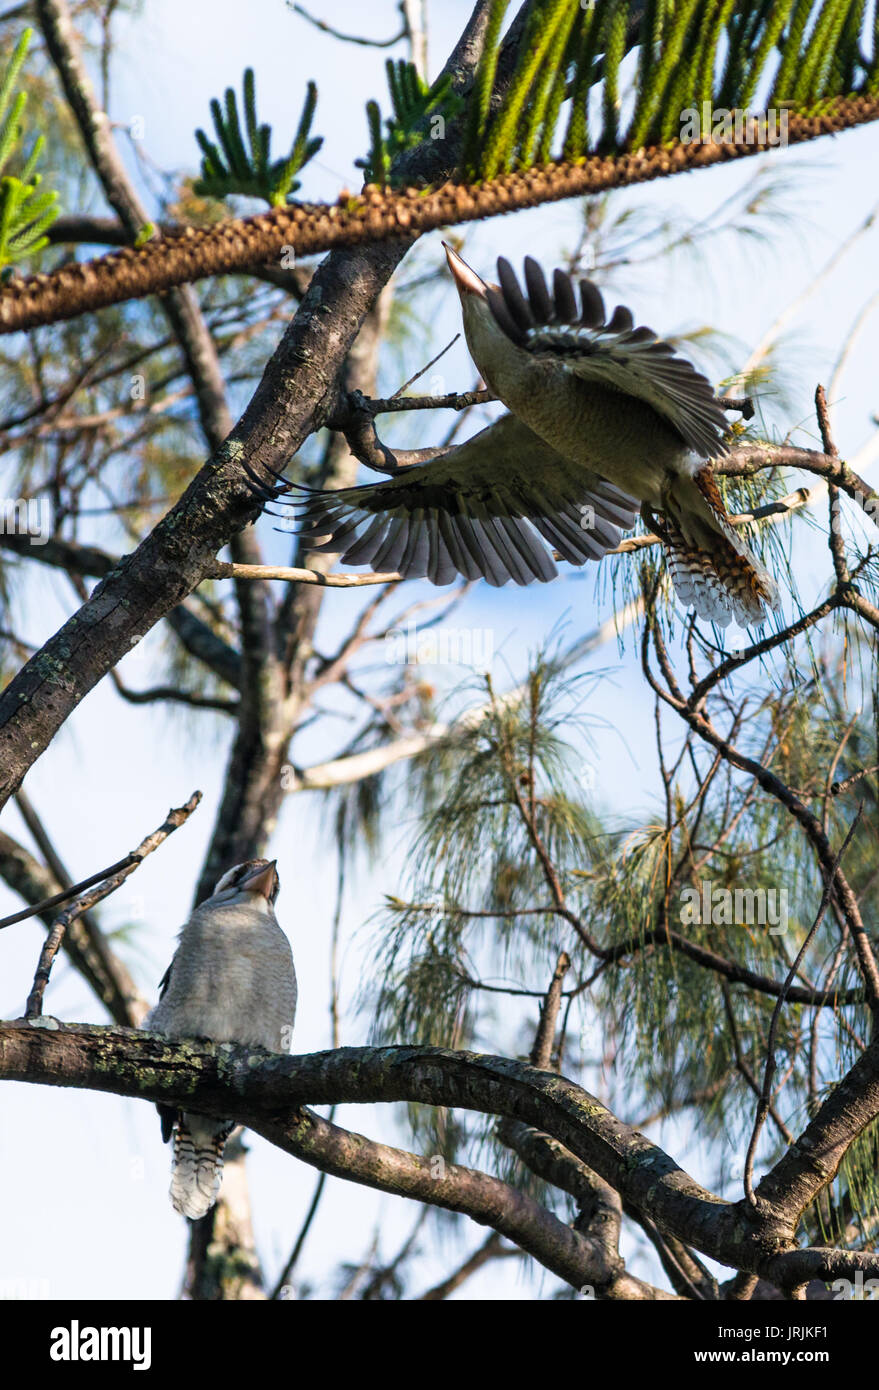 Kookaburra in volo in Cape Byron Bay, NSW, Australia. Foto Stock